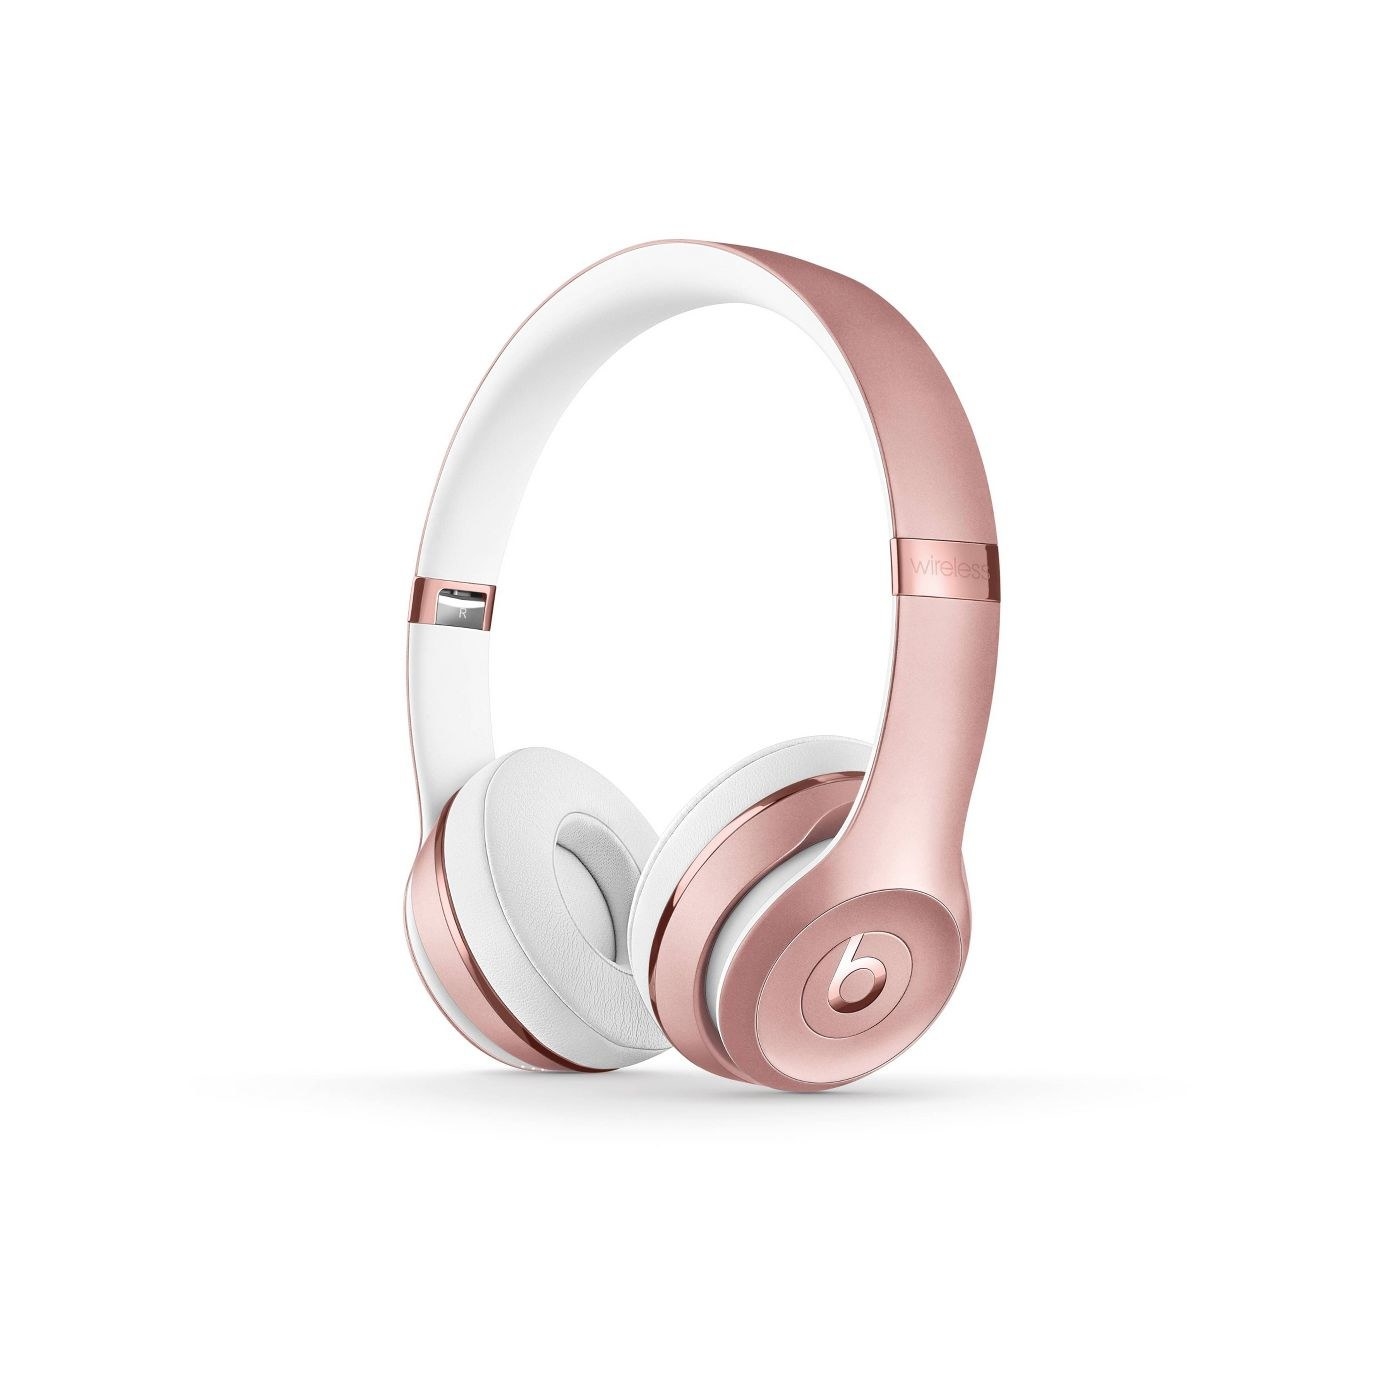 A pair of pink beats headphones